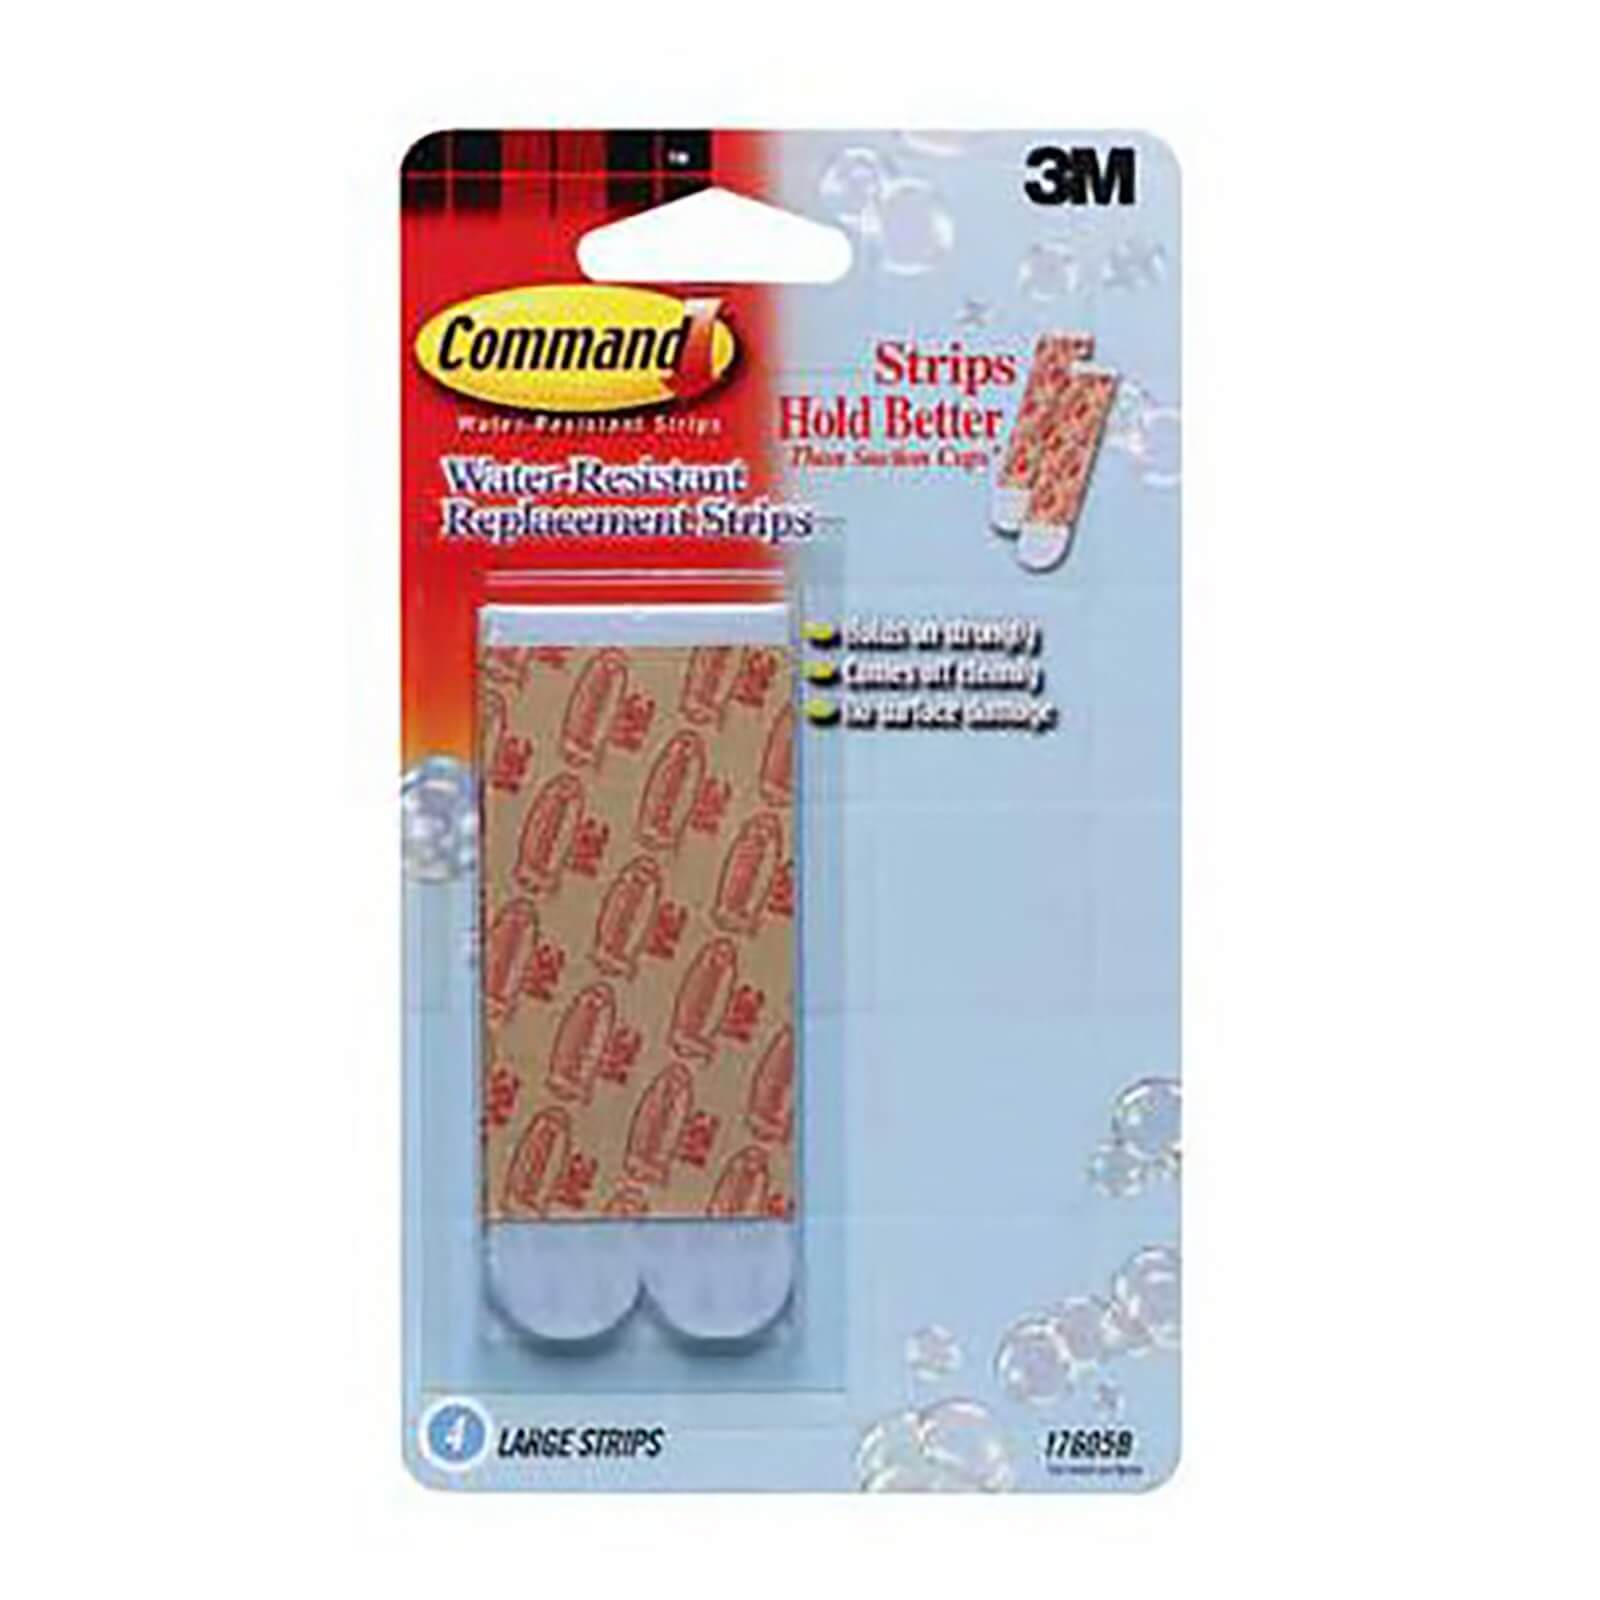 Command Self-Adhesive Large Waterproof Strips - 4 Pack